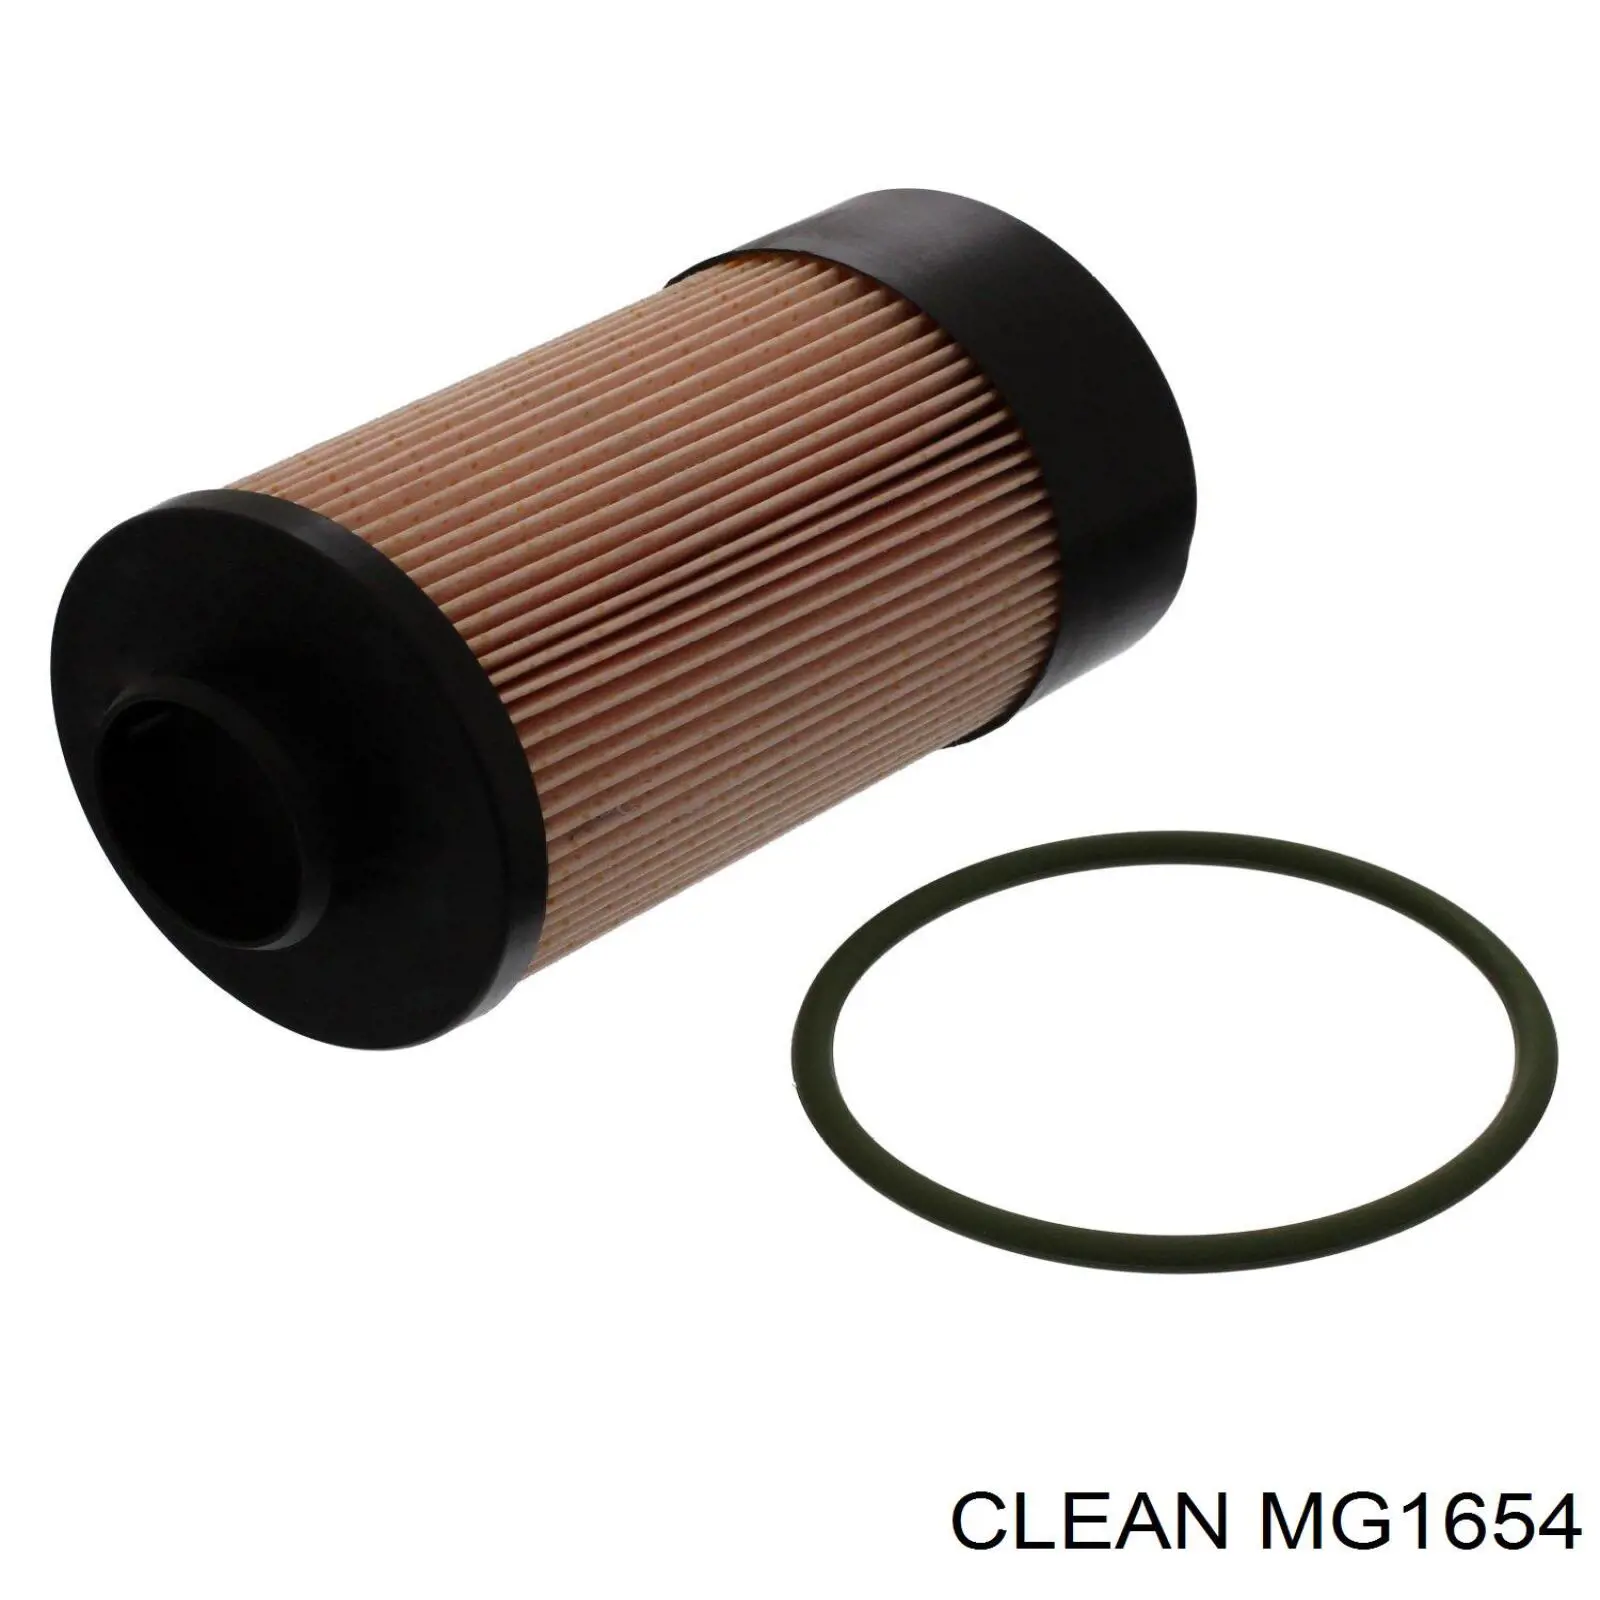 MG1654 Clean filtro de combustible